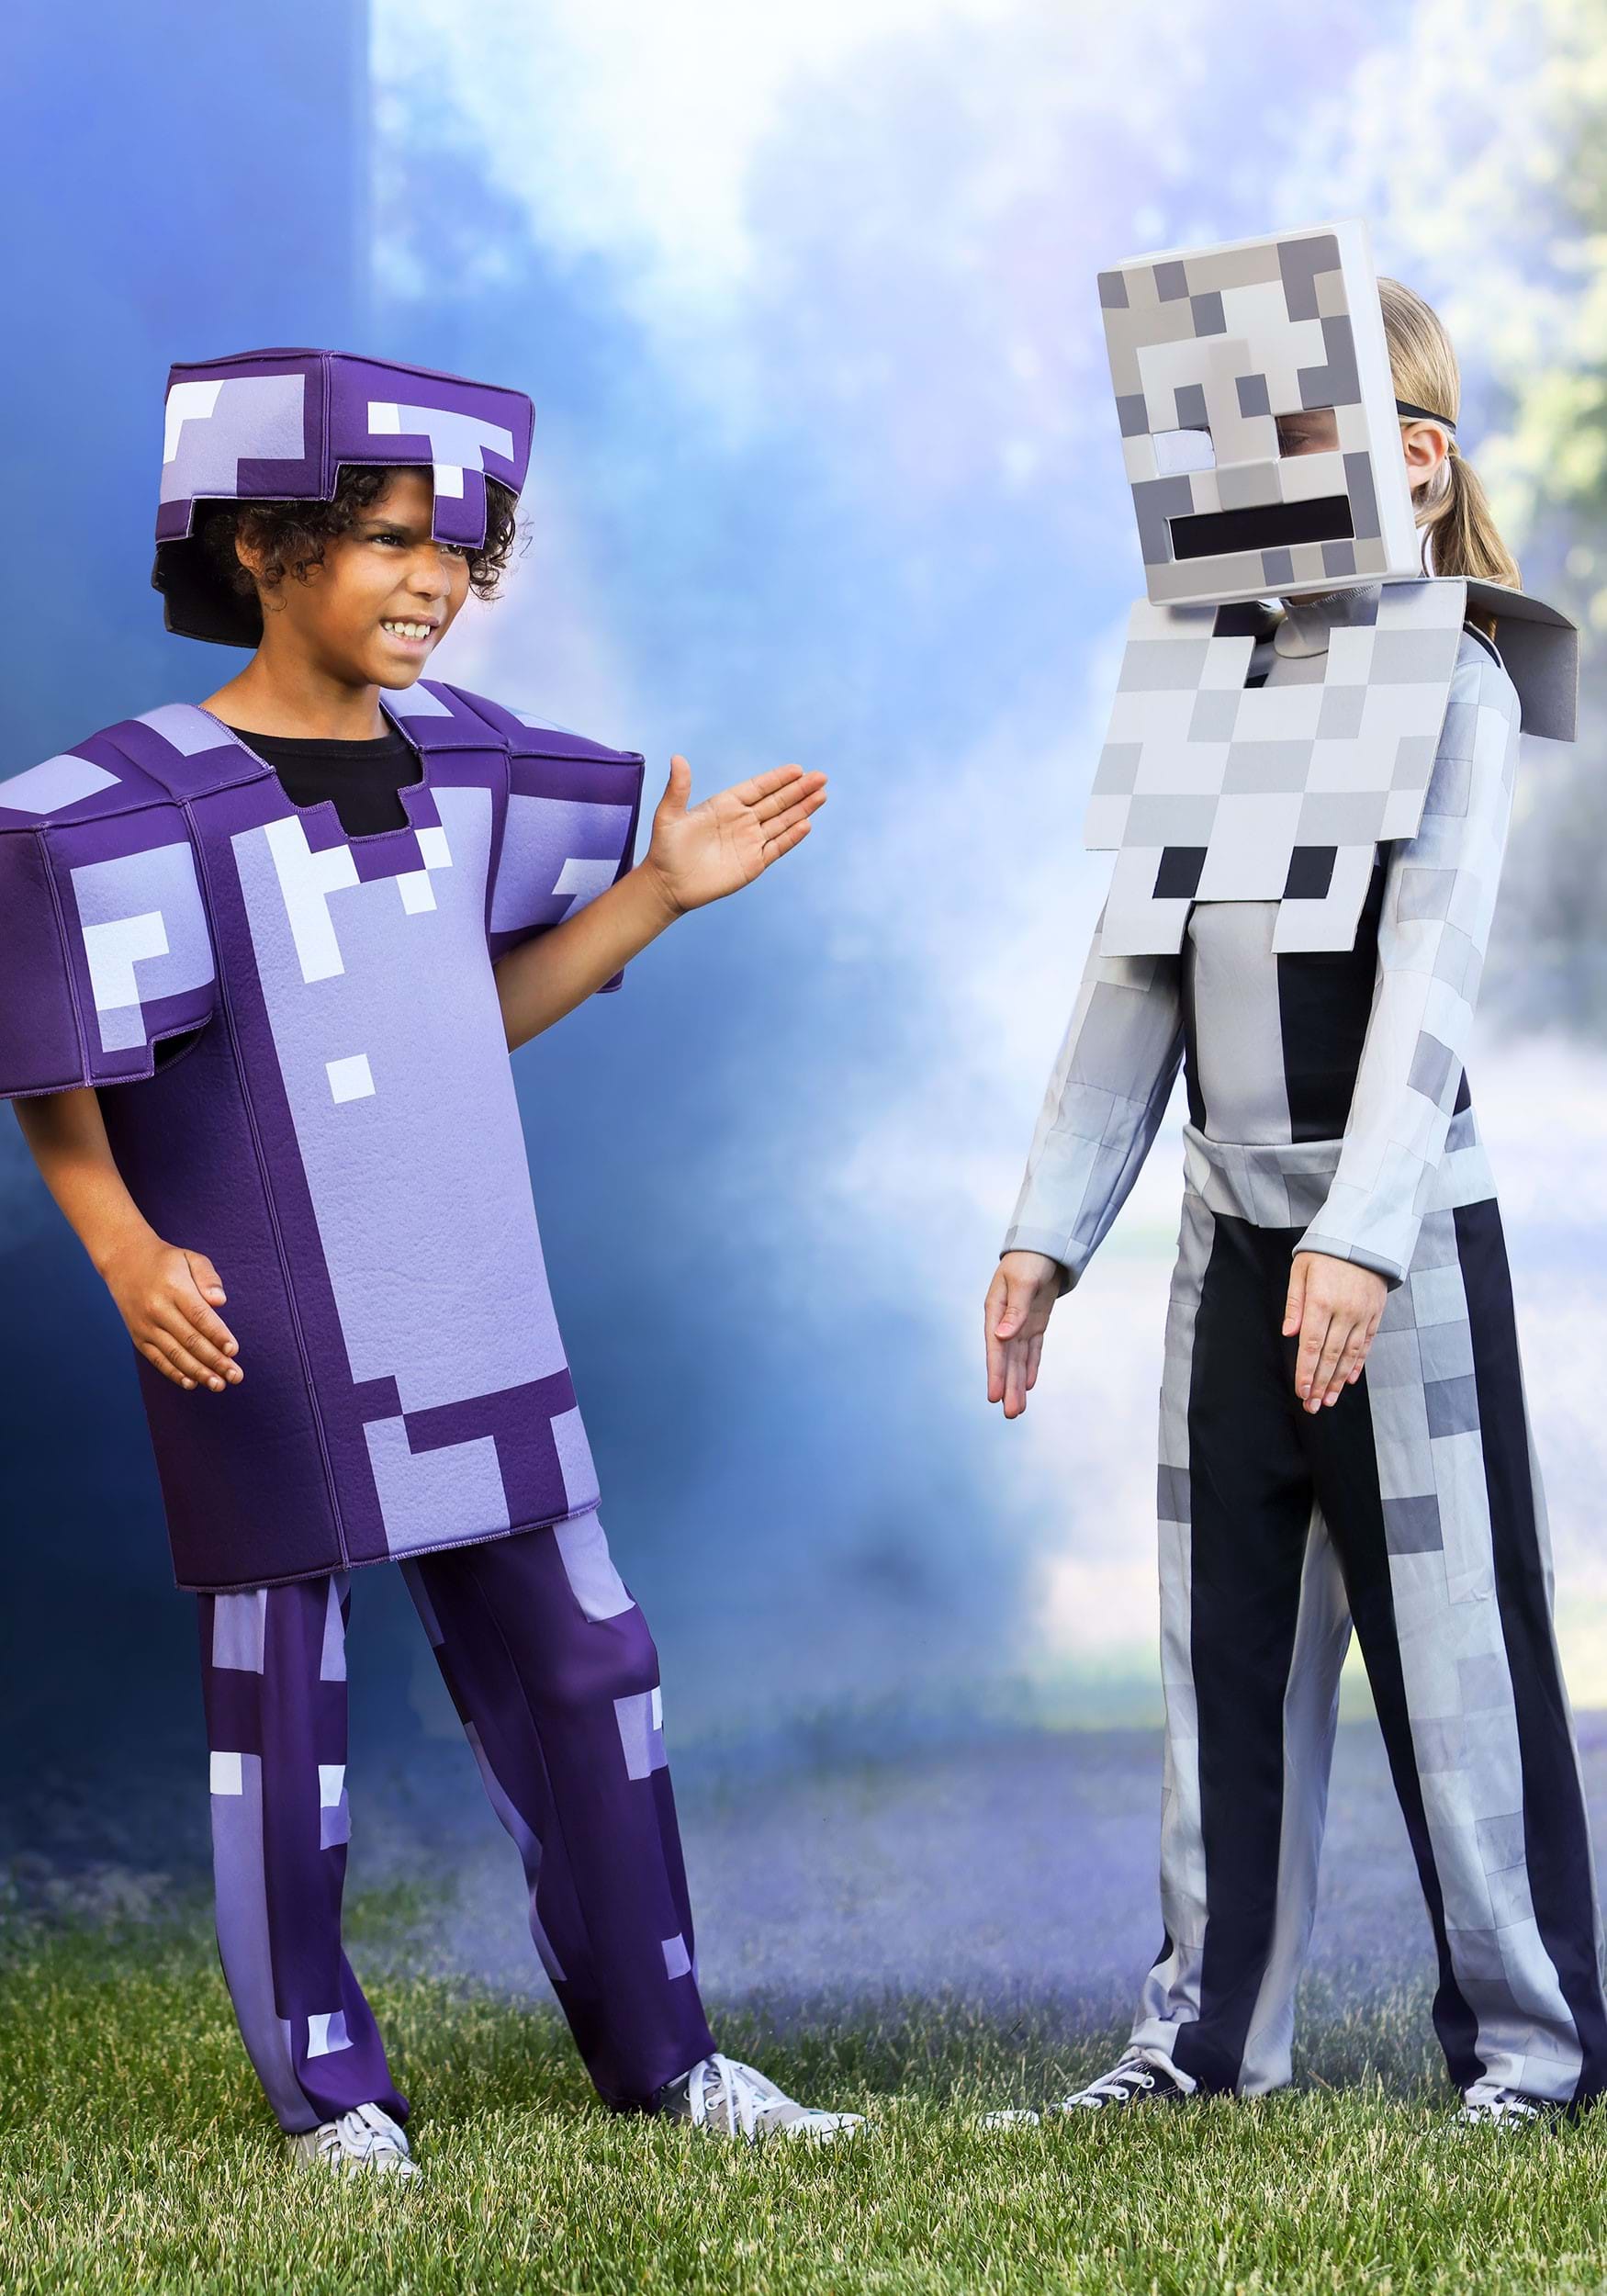 Minecraft Kid's Enchanted Diamond Armor Deluxe Costume